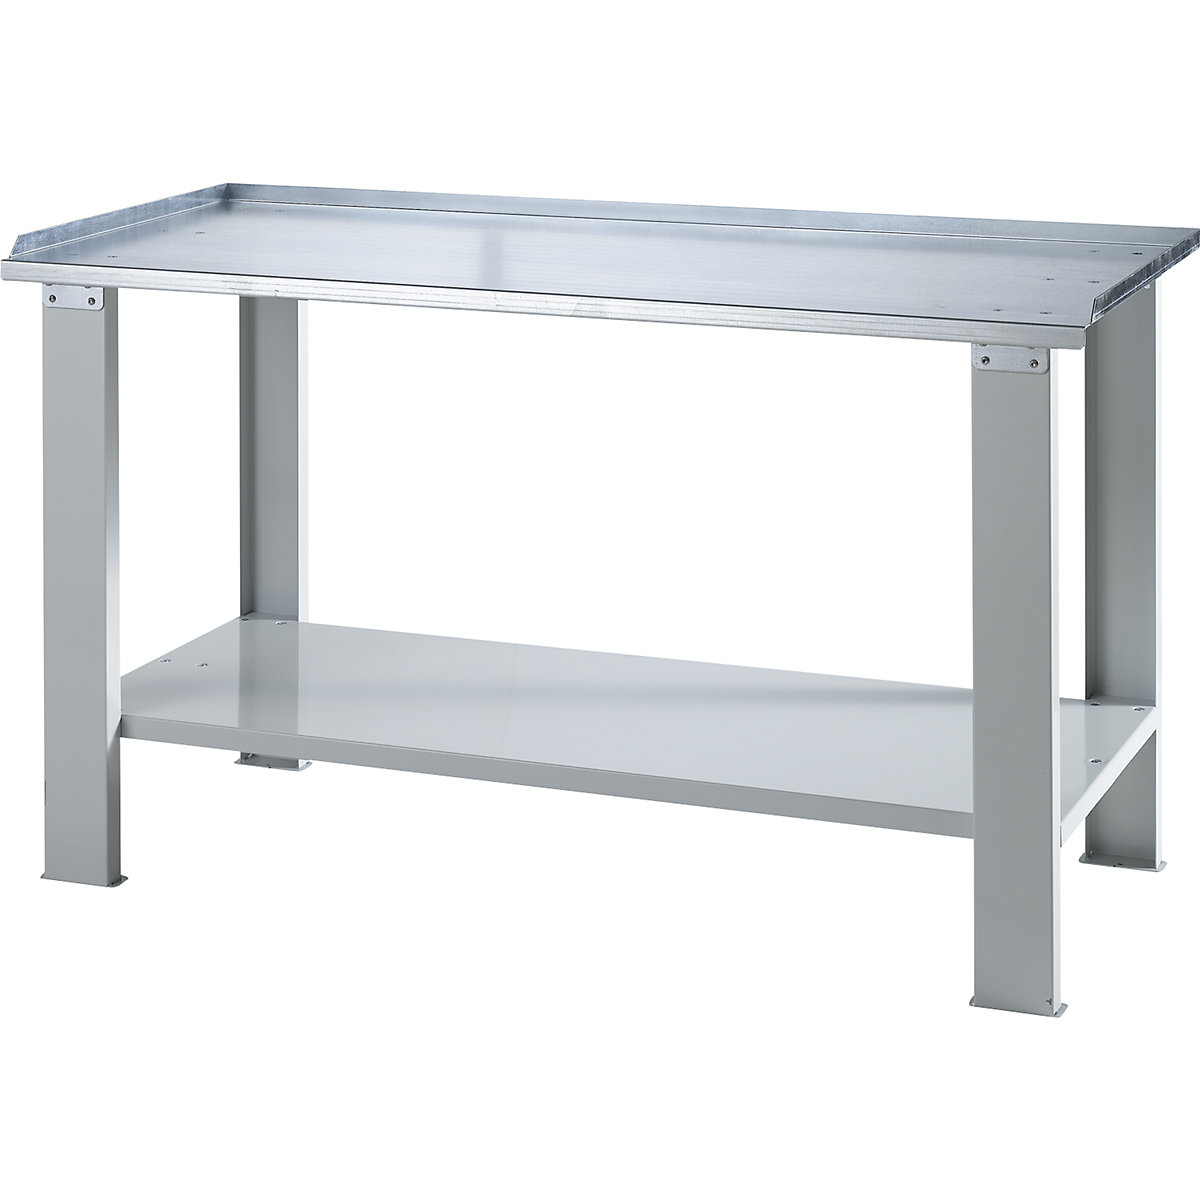 Radni stol za teške terete – eurokraft basic, s radnom pločom od čeličnog lima, ŠxD 1500 x 700 mm-2